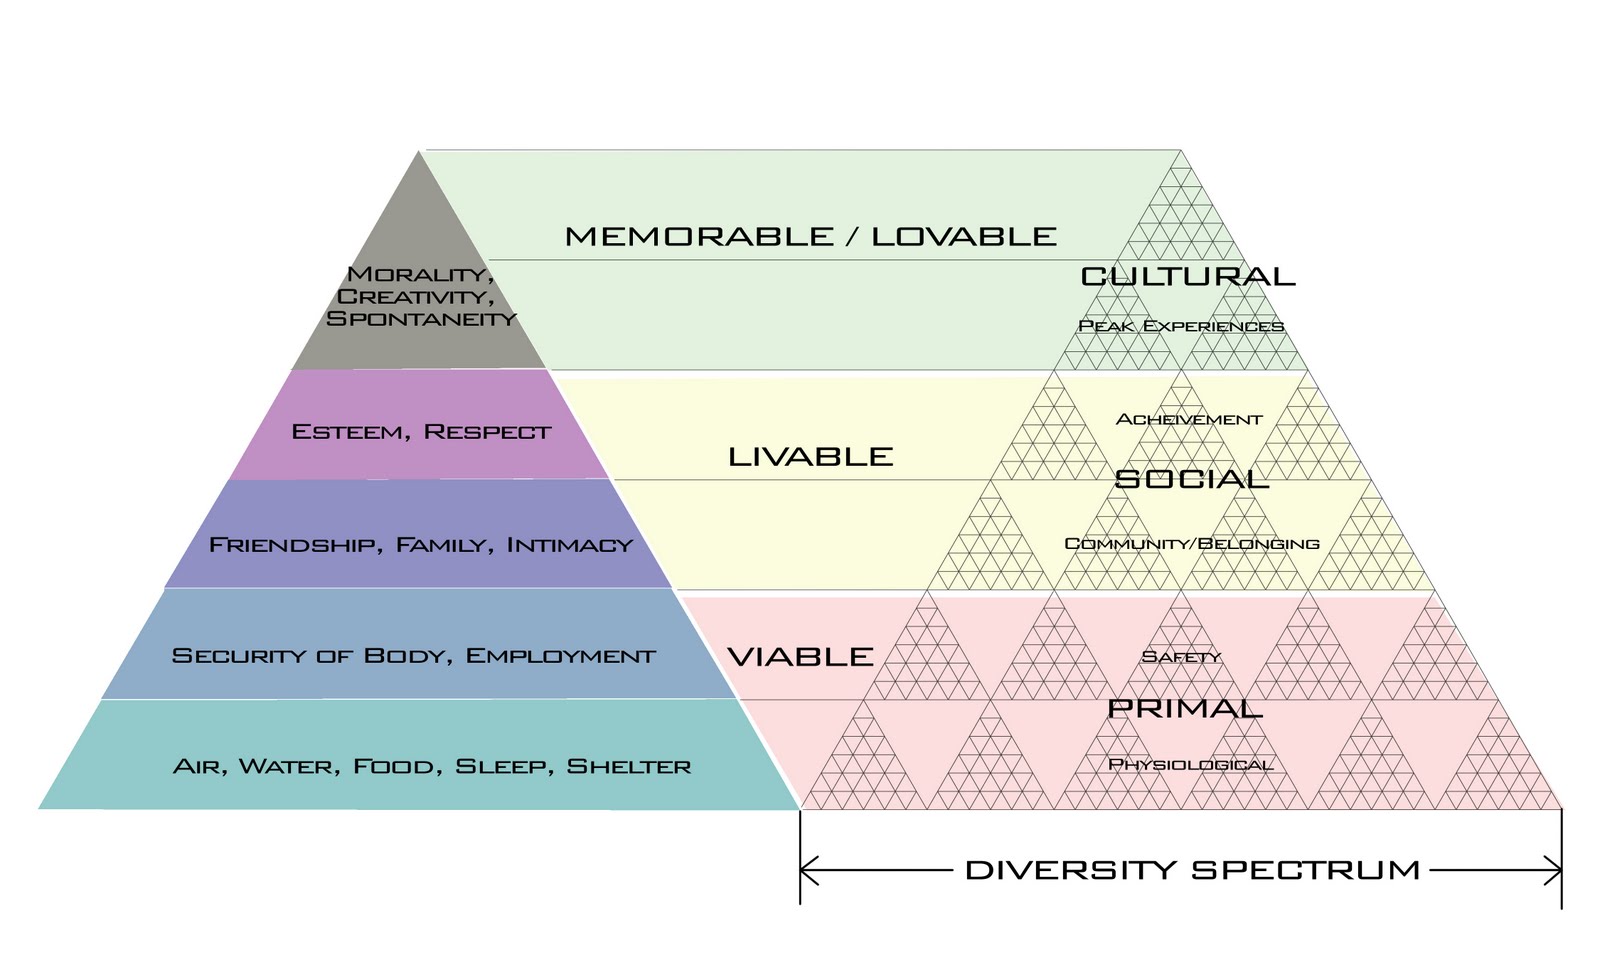 http://2.bp.blogspot.com/_D5kx0bUGx_c/S_v4YDHga8I/AAAAAAAACfc/lLwt_qvXz5Q/s1600/city+pyramid+-+hierarchy+-+diversity.jpg